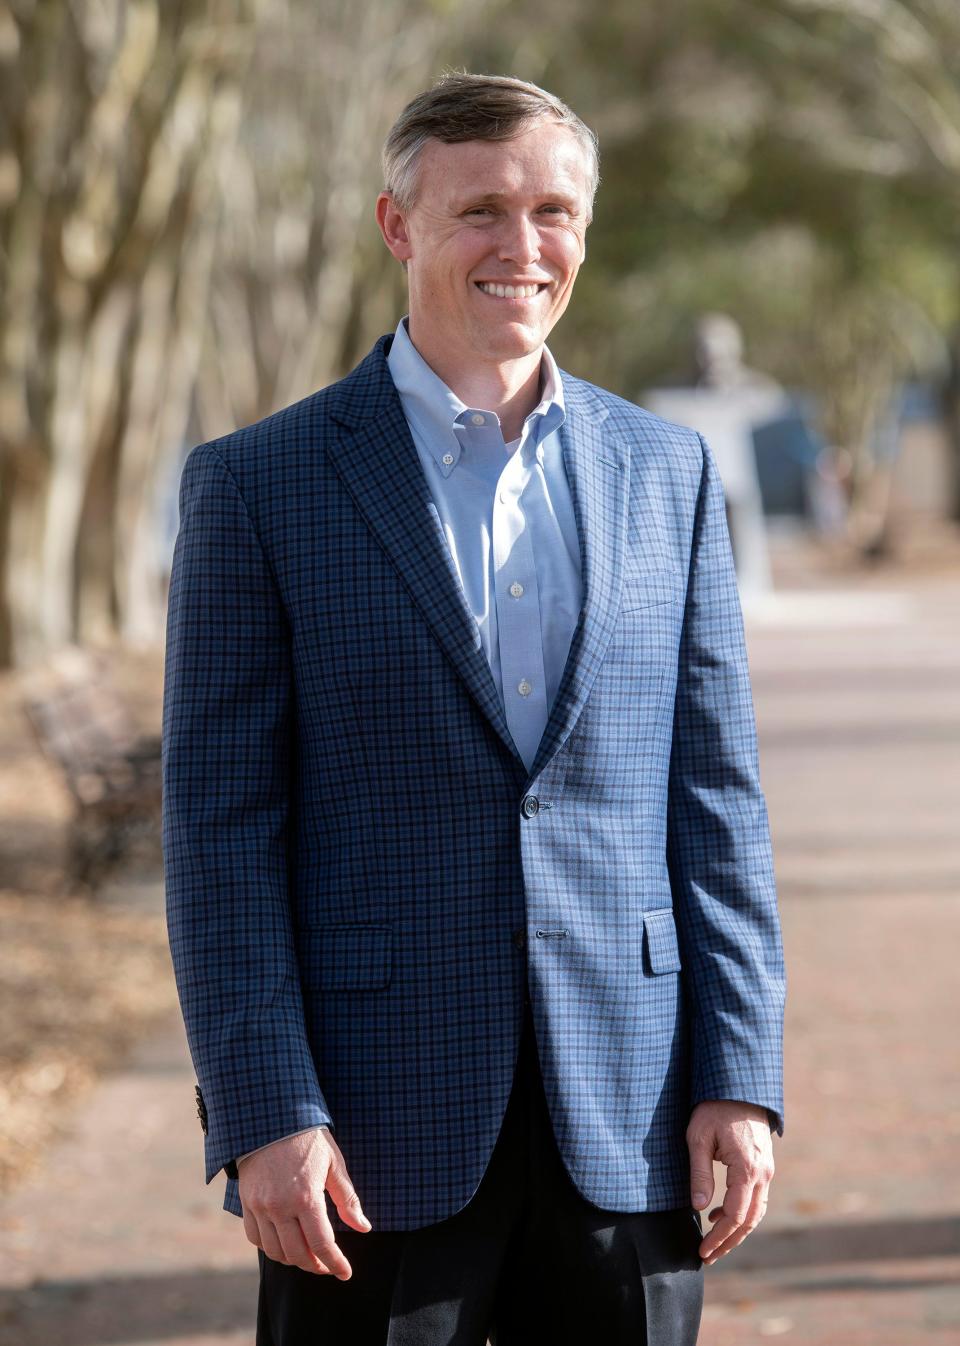 Pensacola businessman Frank White has announced plans to run for the District 1 Florida Senate seat